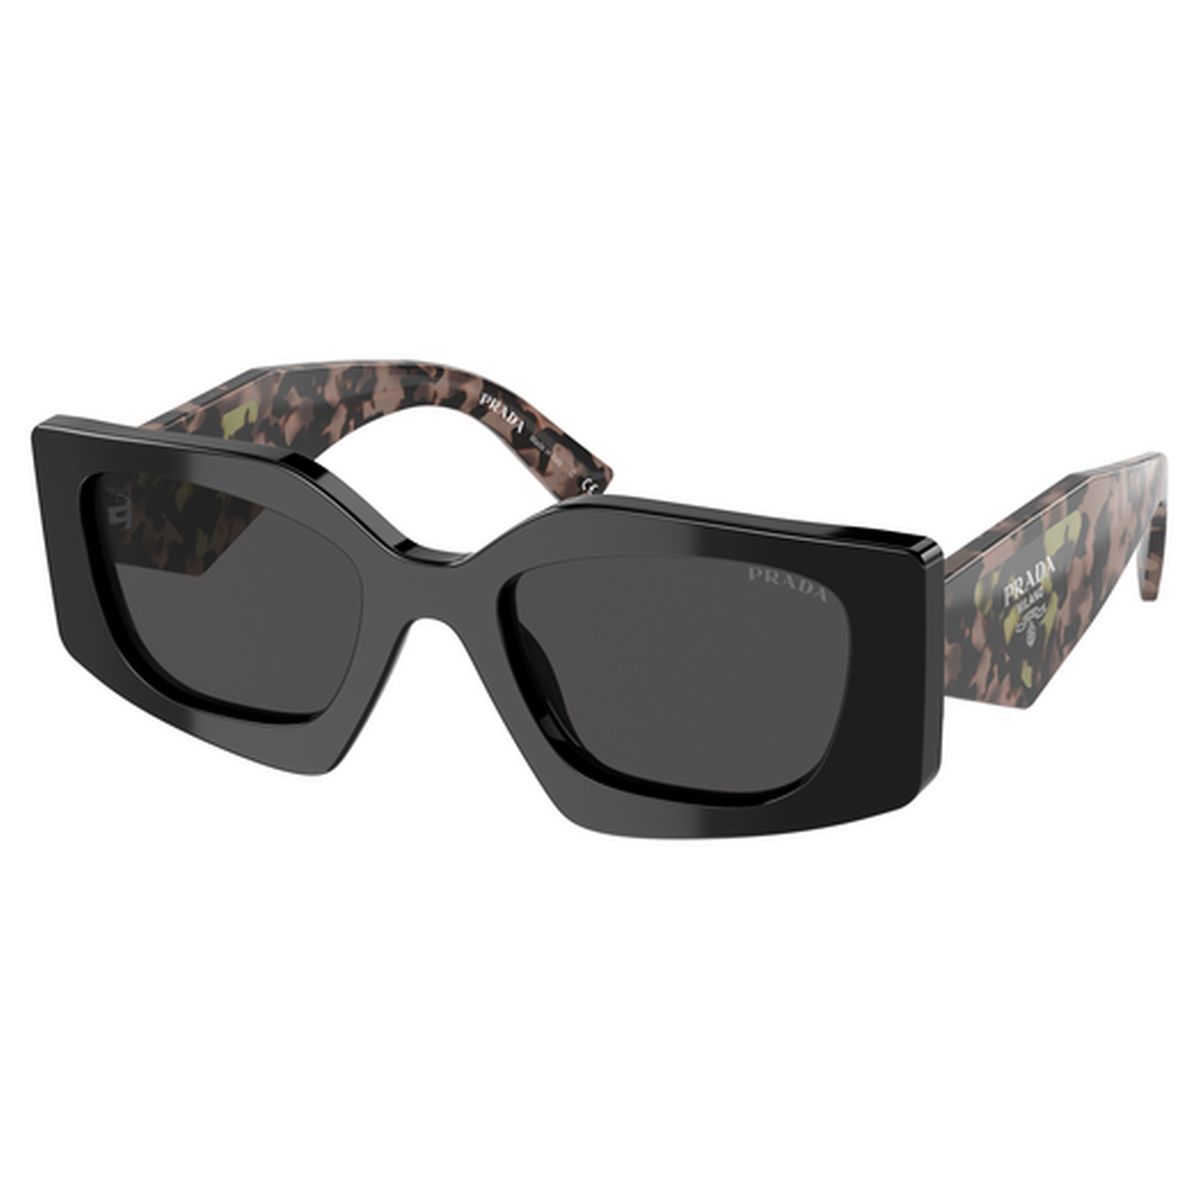 Prada | AvramisOptics Contact Lenses, Sunglasses and Eyeglasses